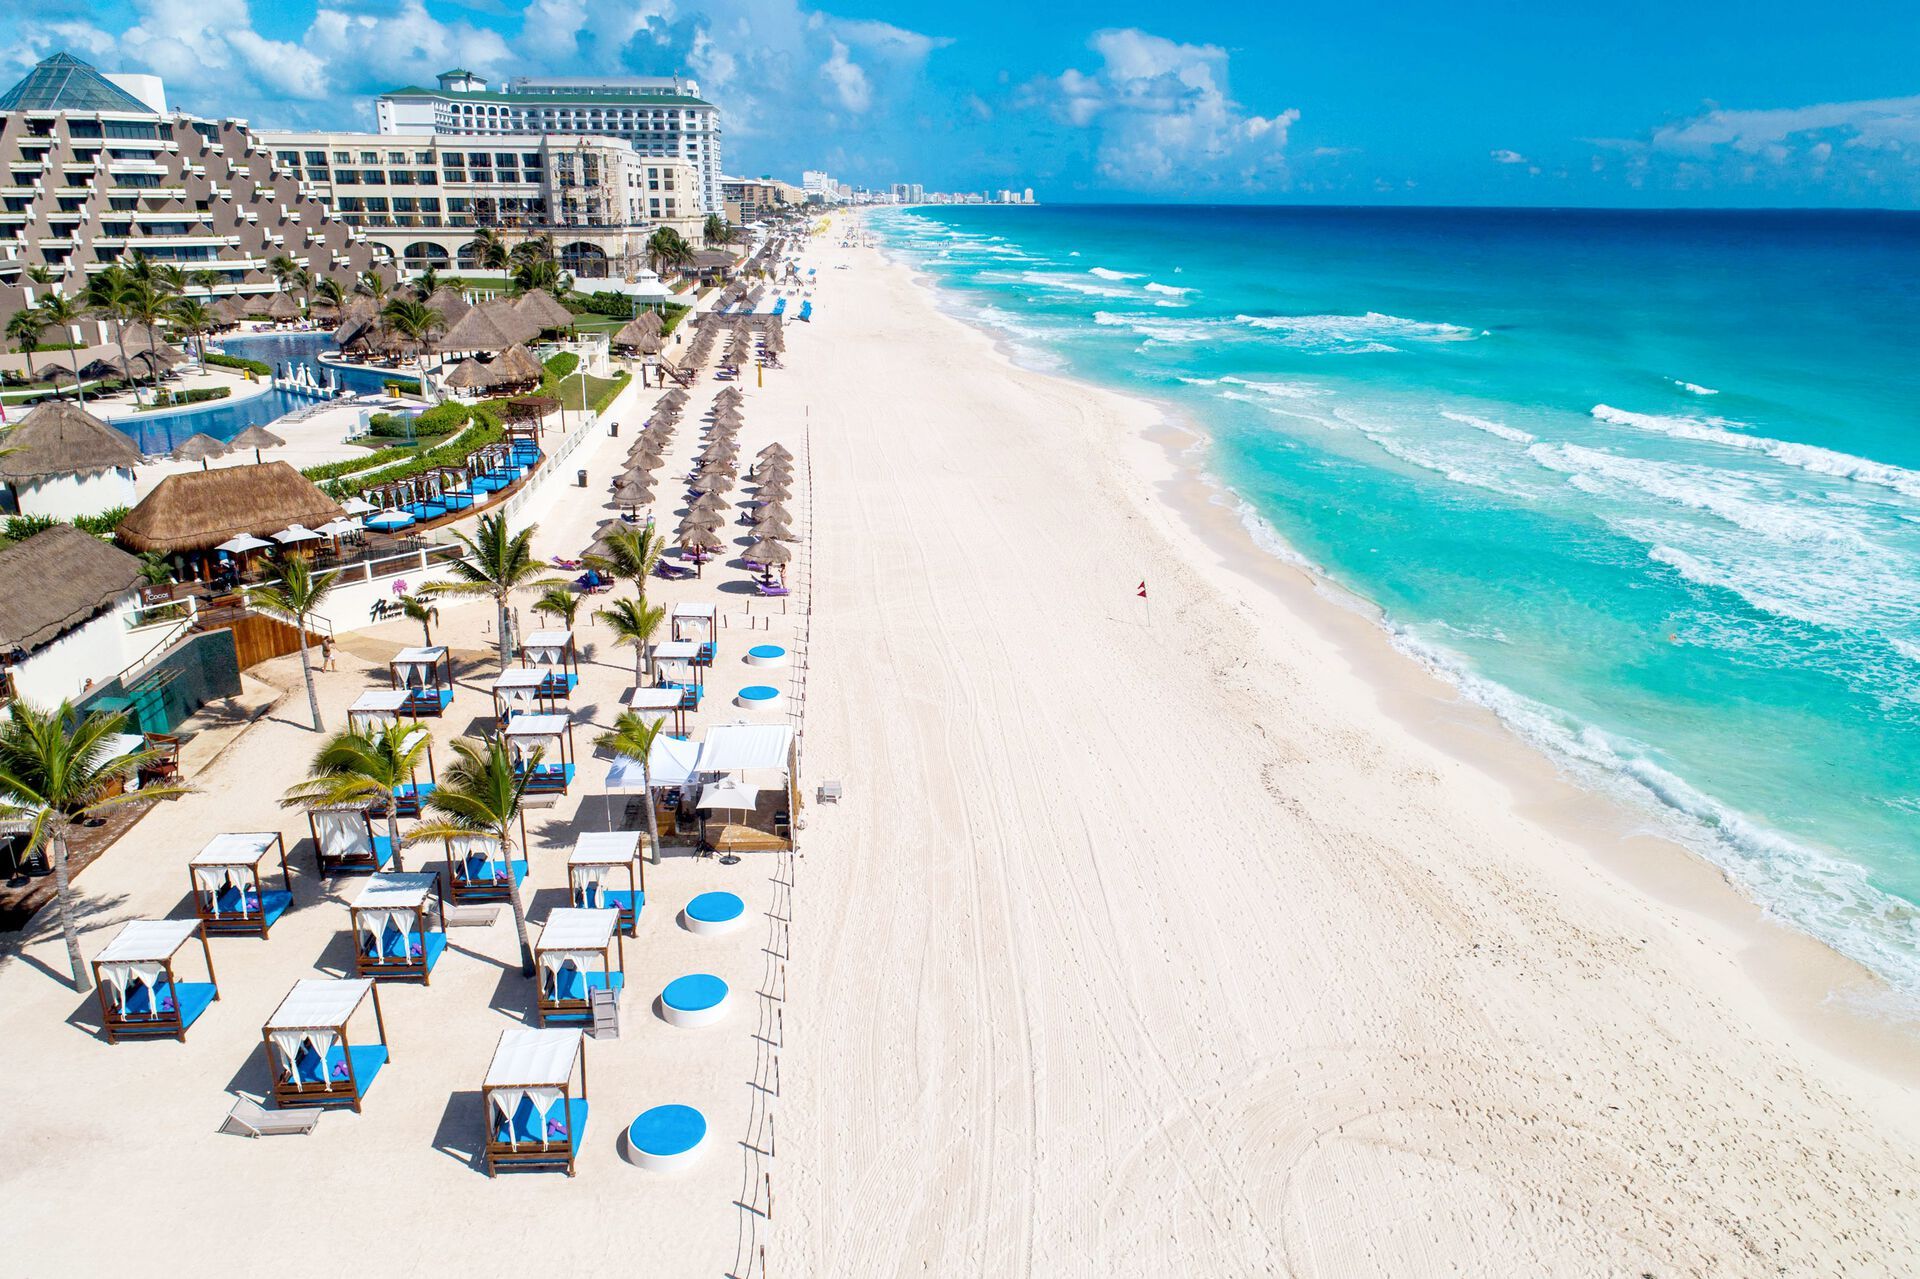 Hotel Paradisus Cancun - 5*